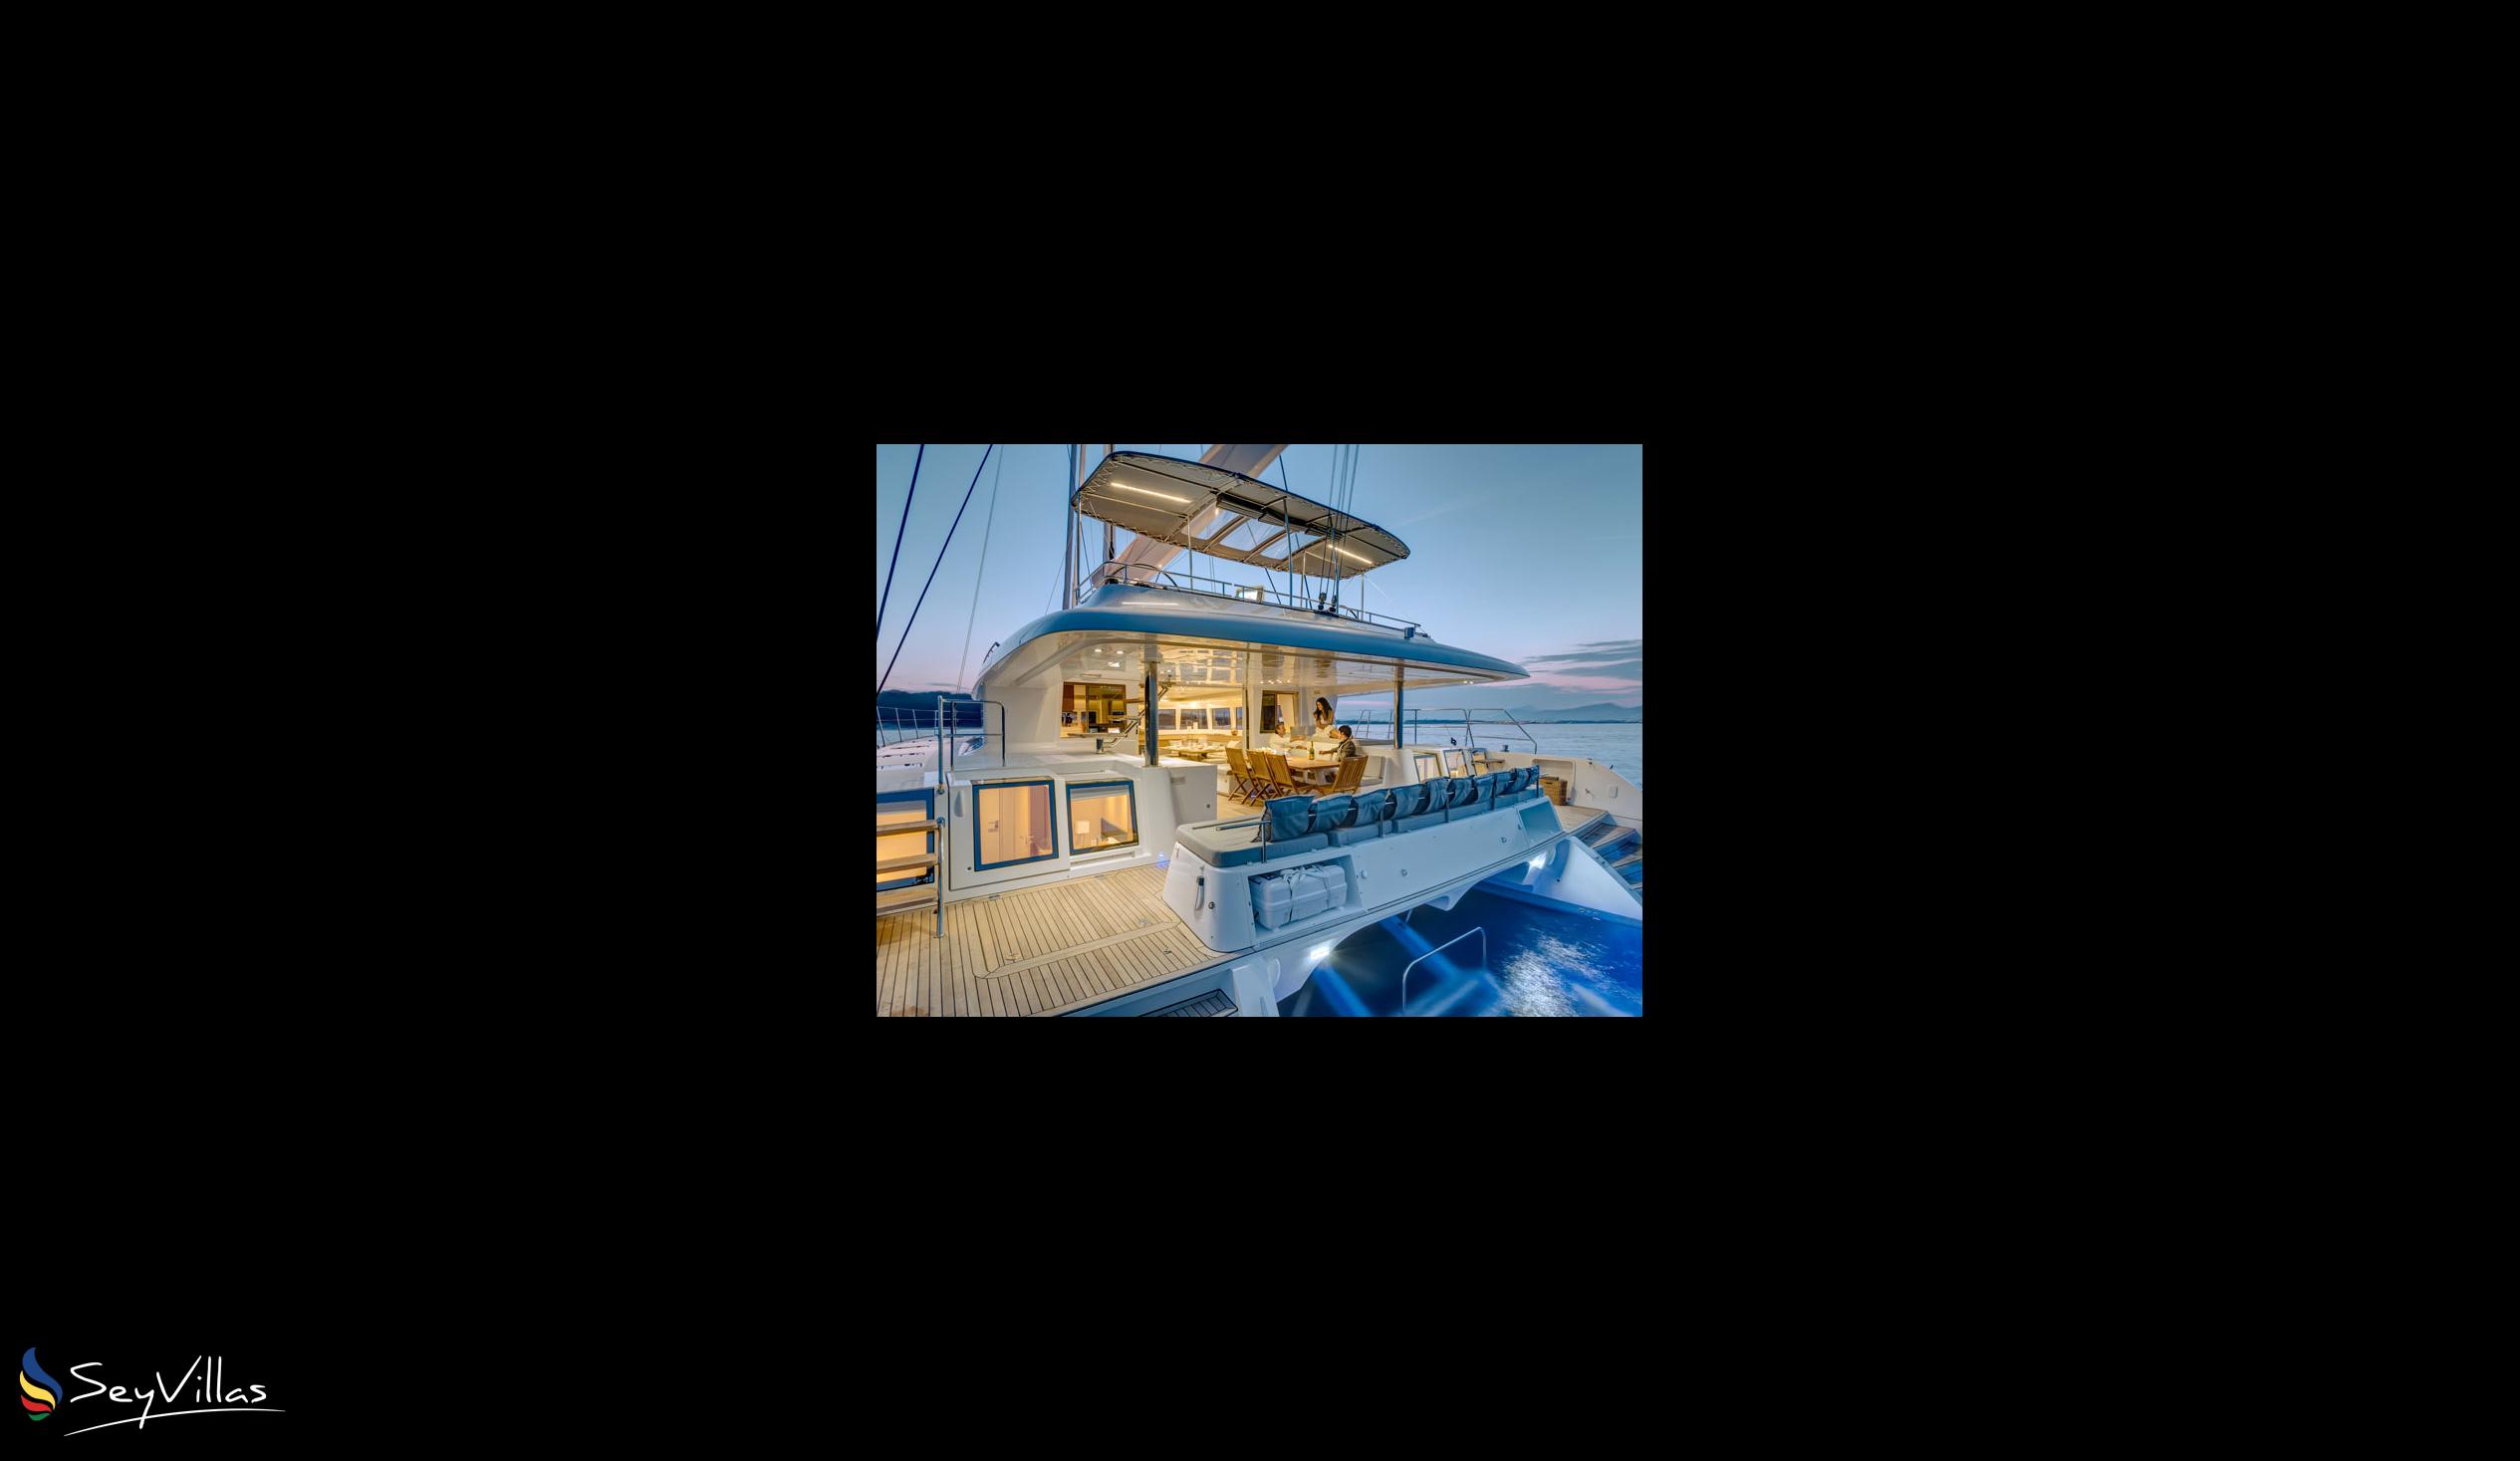 Photo 10: Dream Yacht Silhouette Dream Premium - Outdoor area - Seychelles (Seychelles)